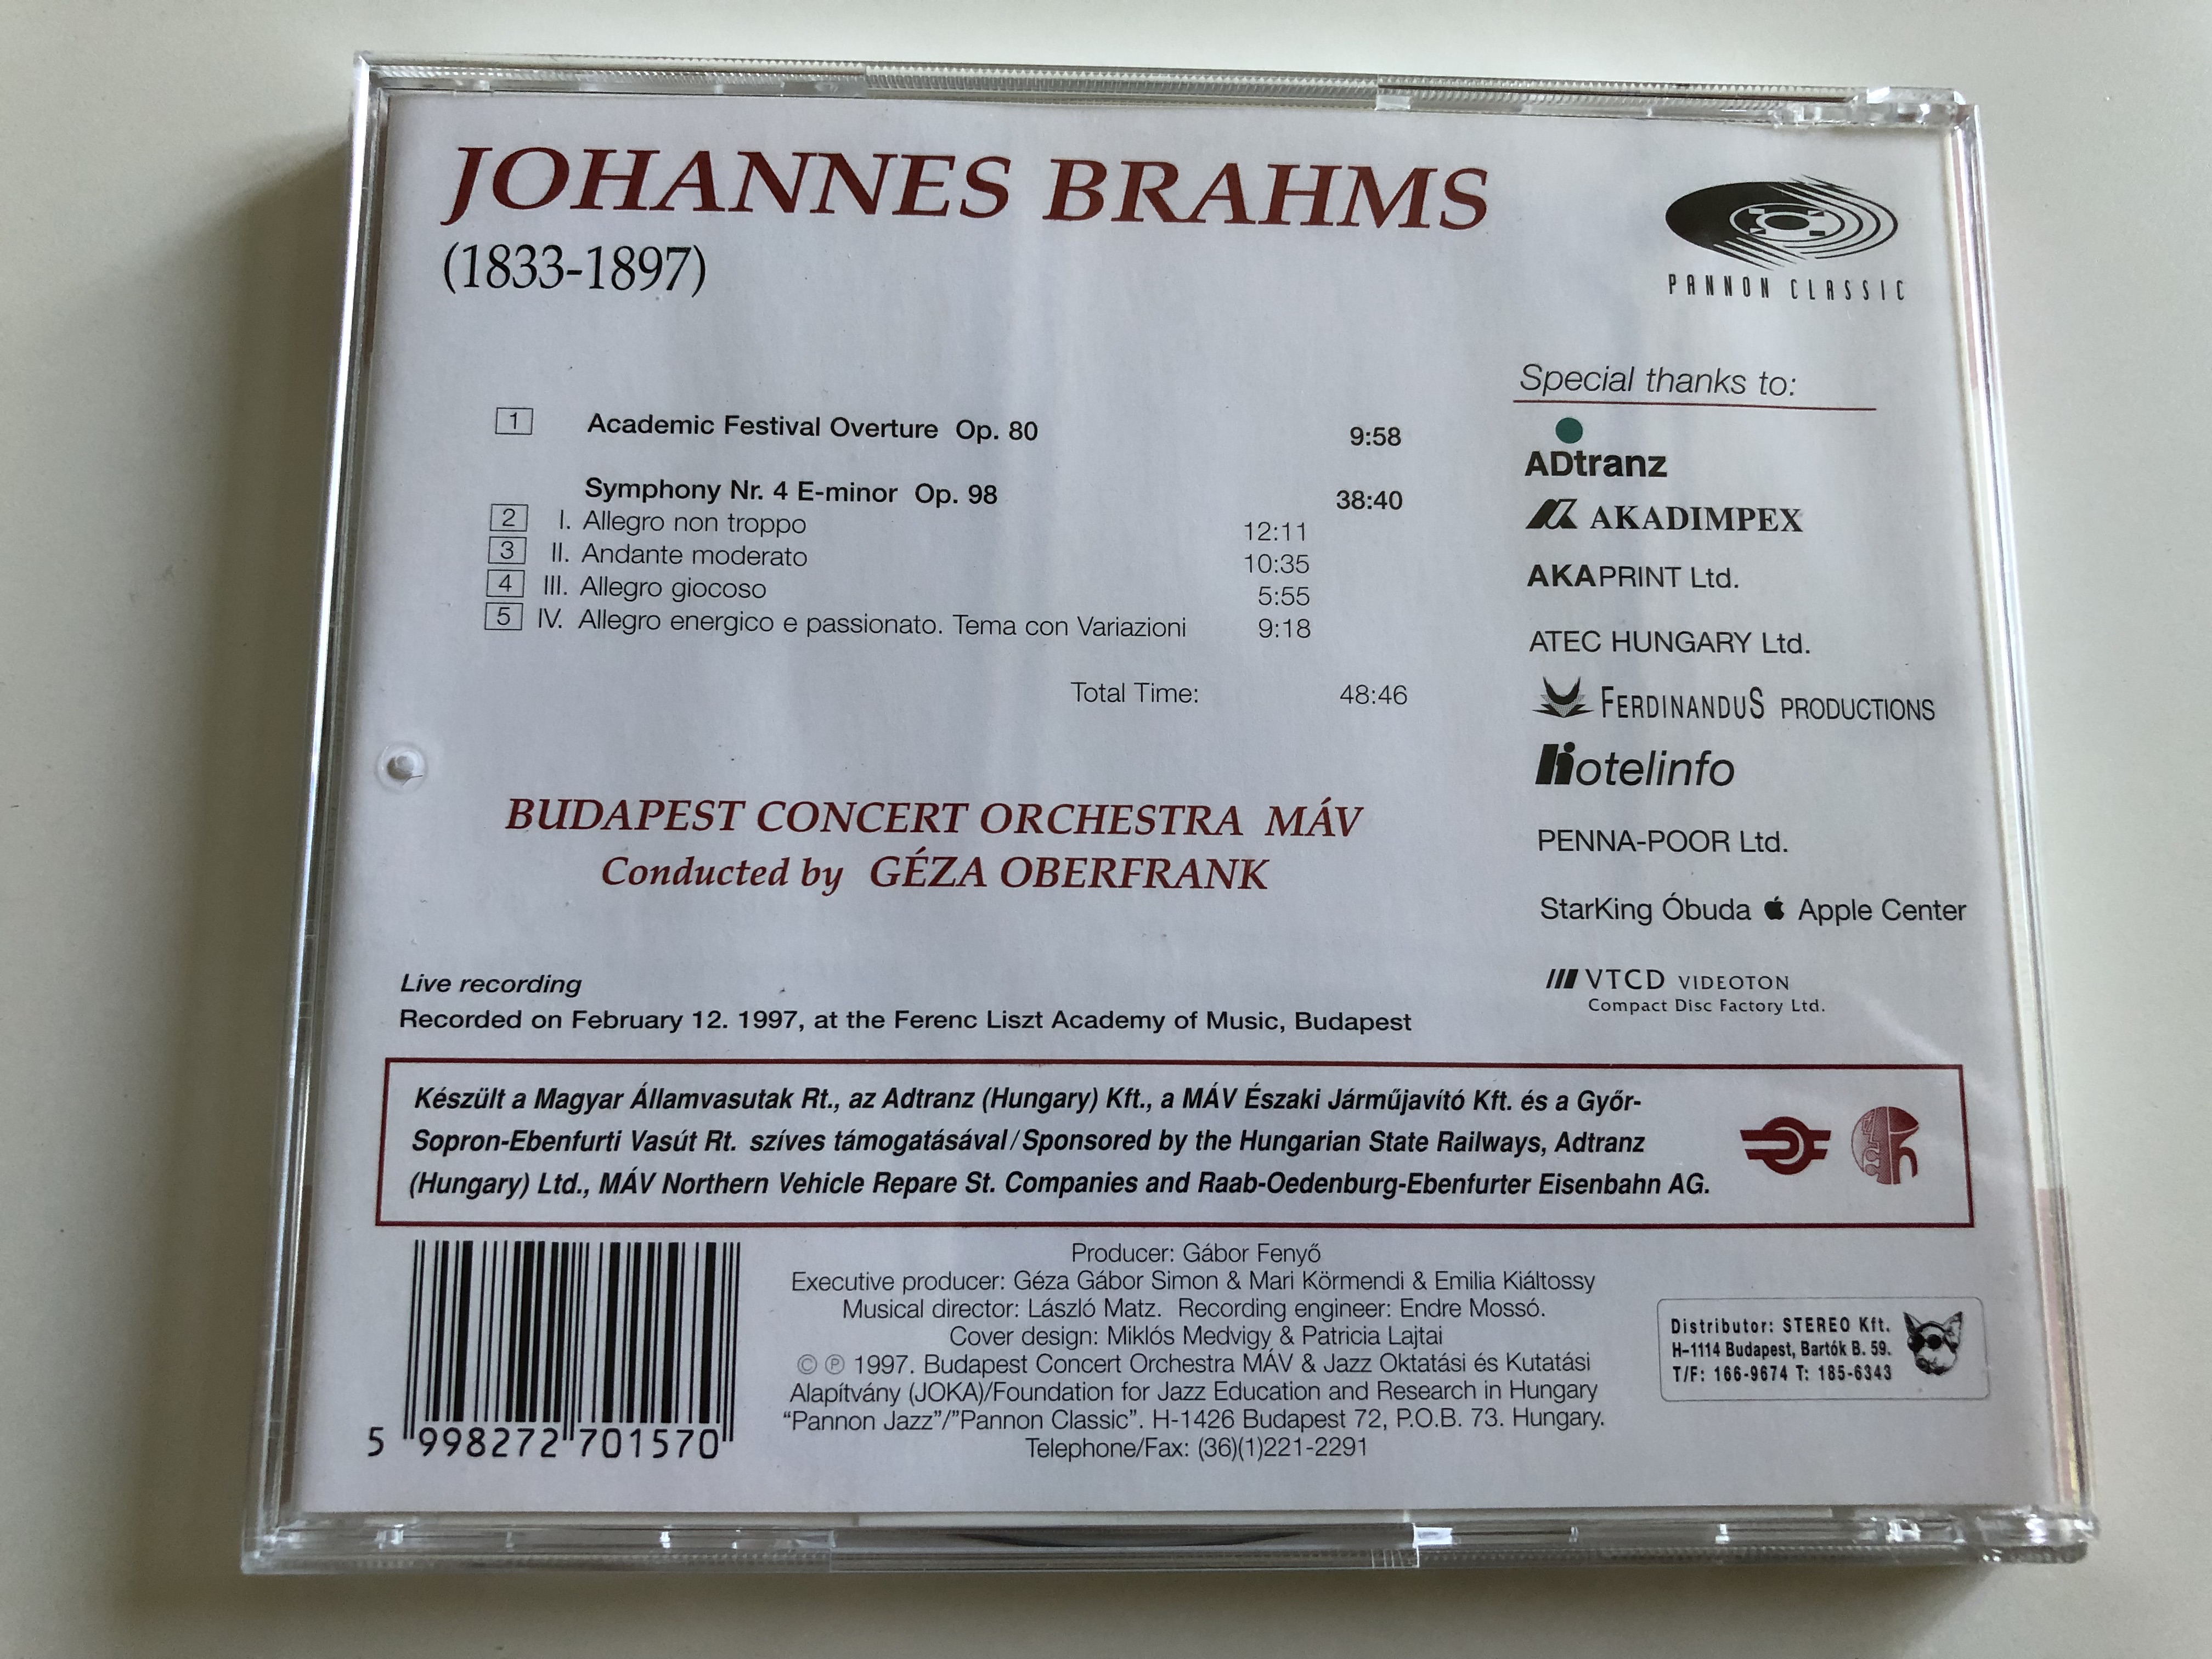 johannes-brahms-academic-festival-overture-op.-80-symphony-nr.-4-e-minor-op.98-brahms-festival-1997-budapest-concert-orchestra-m-v-conducted-by-g-za-oberfrank-pannon-classic-audio-cd-1997-live-recording-7-.jpg